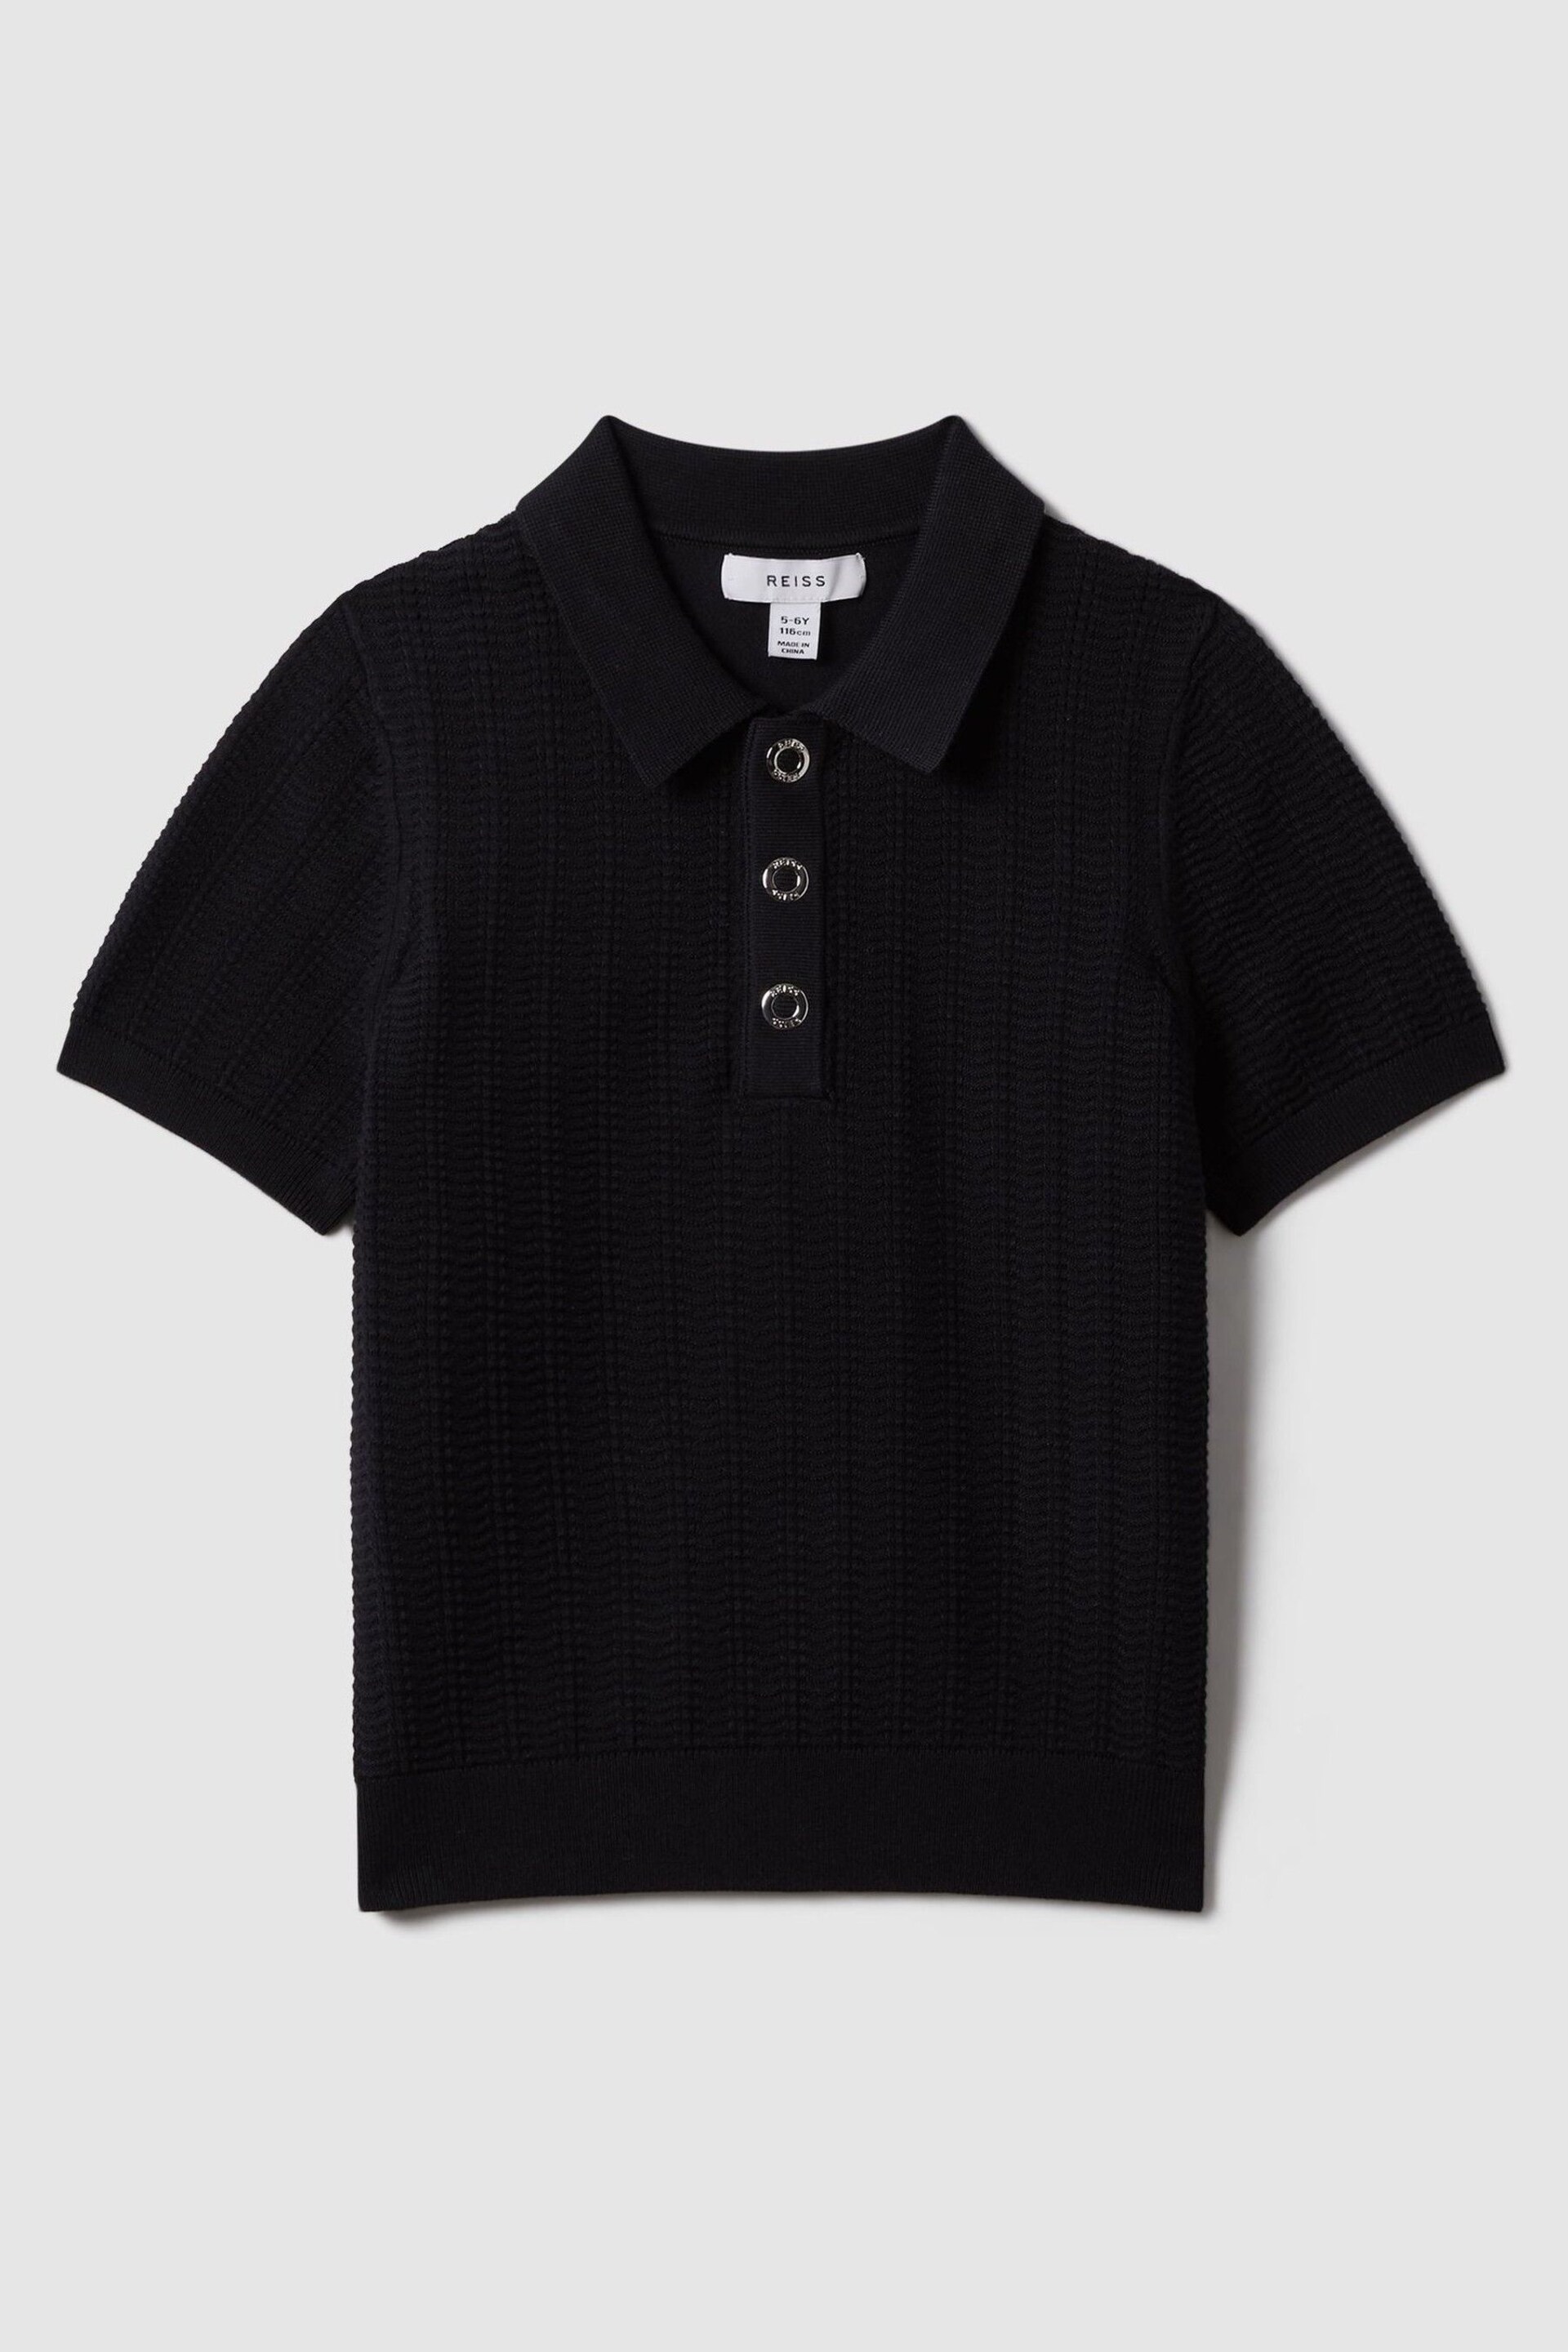 Reiss Navy Pascoe Junior Textured Modal Blend Polo Shirt - Image 1 of 3